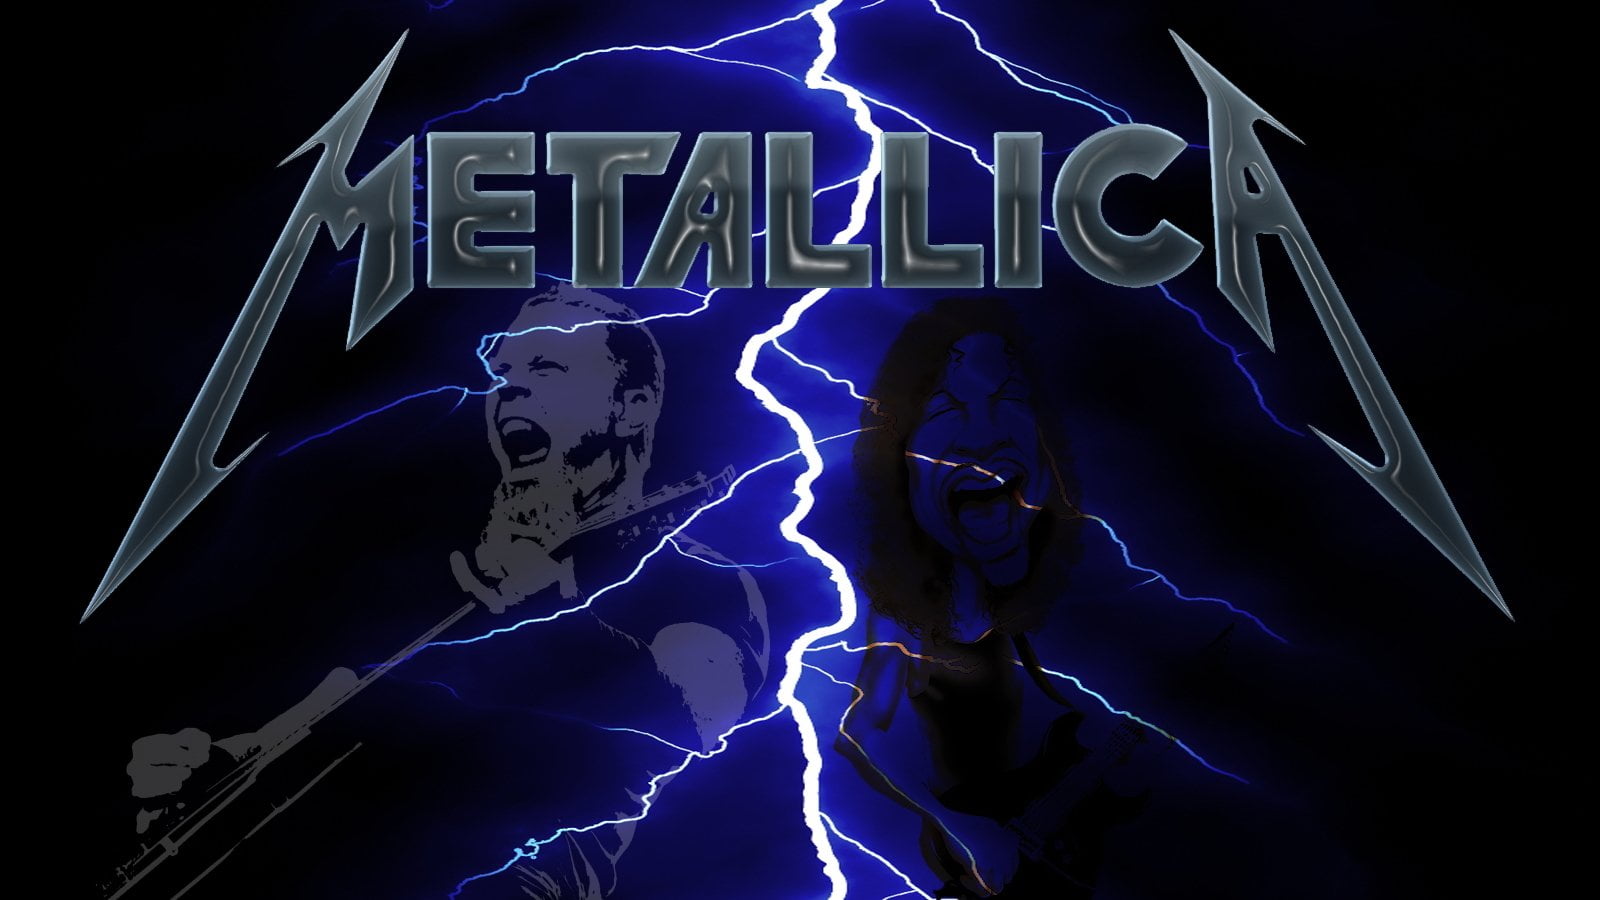 Metallica wallpaper, Band (Music), Heavy Metal, night, communication